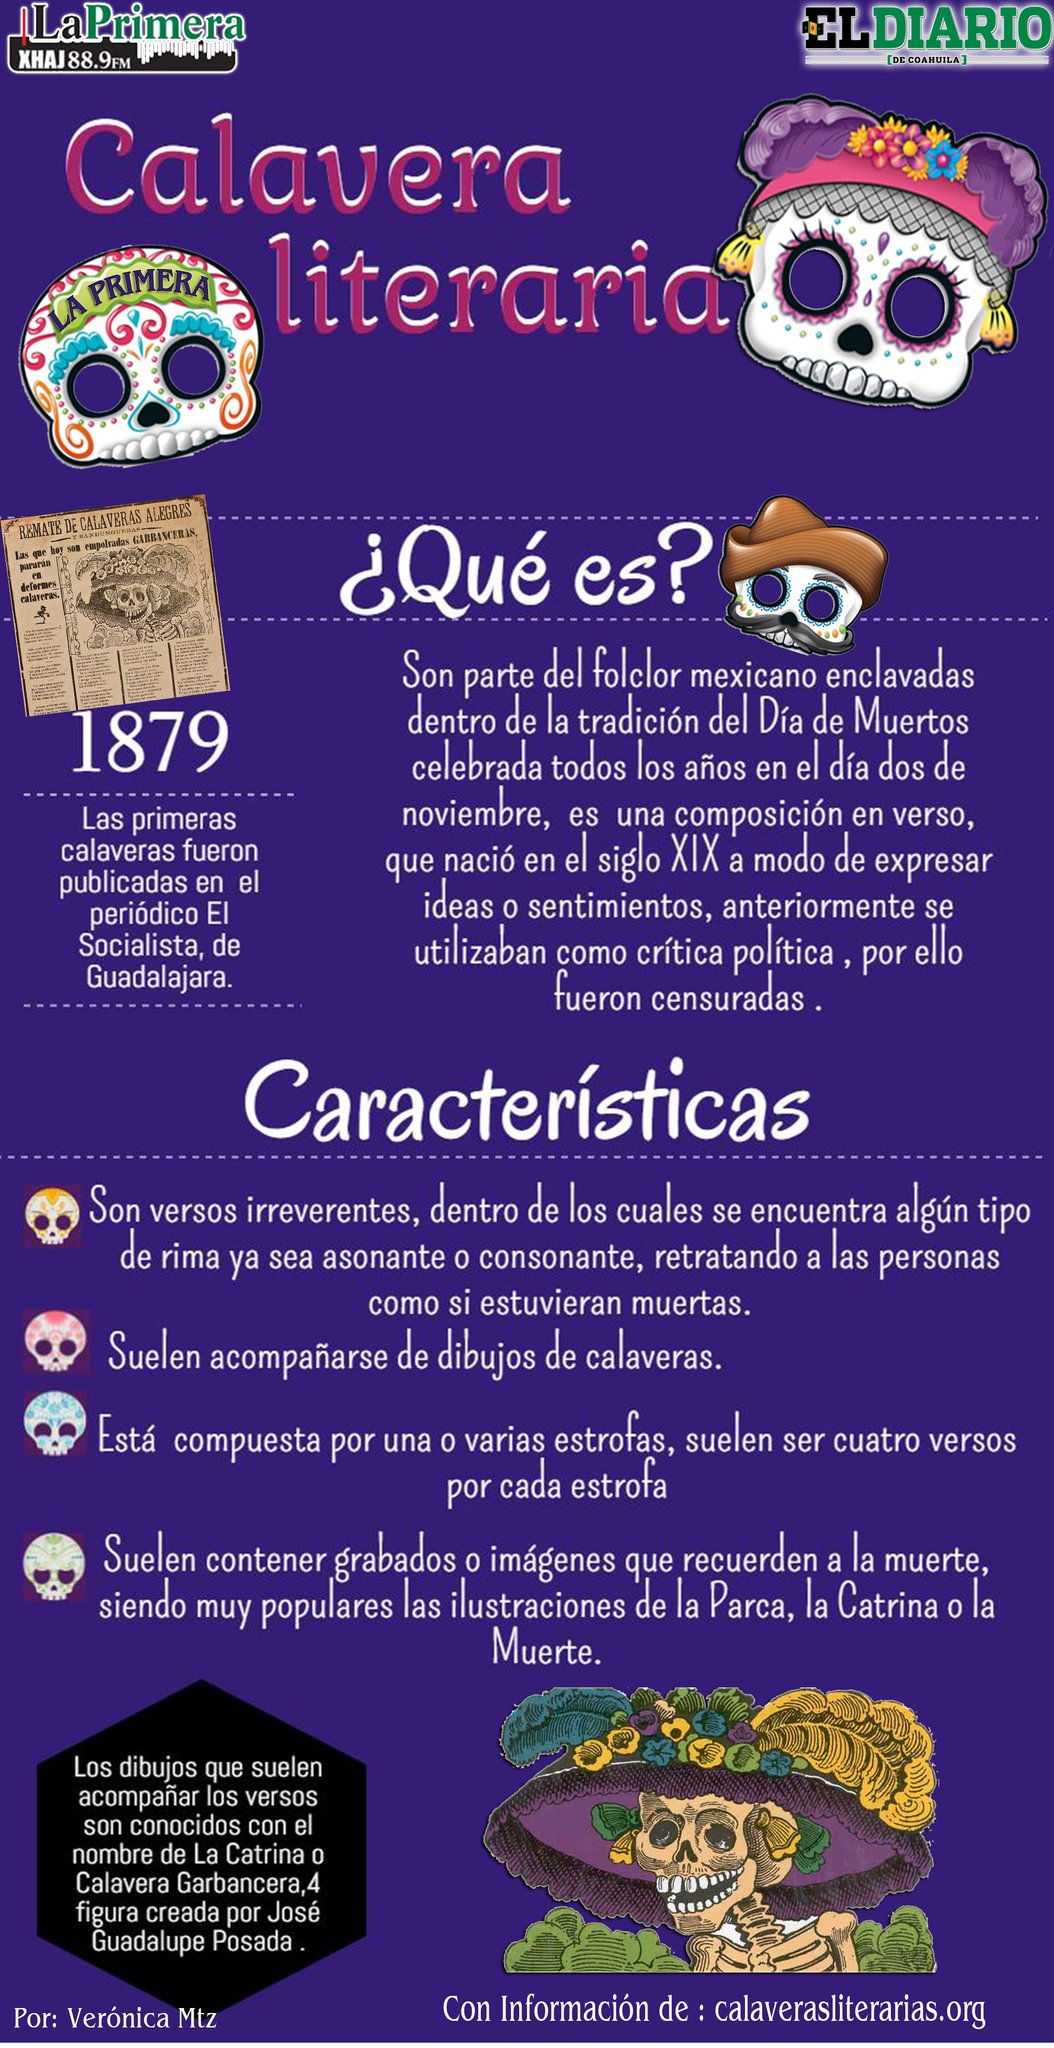 Twitter 上的La Primera 88.9："@nuestro_mundo Infografía "Calaveras literarias"  https://t.co/XQDFaTfWAa" / Twitter